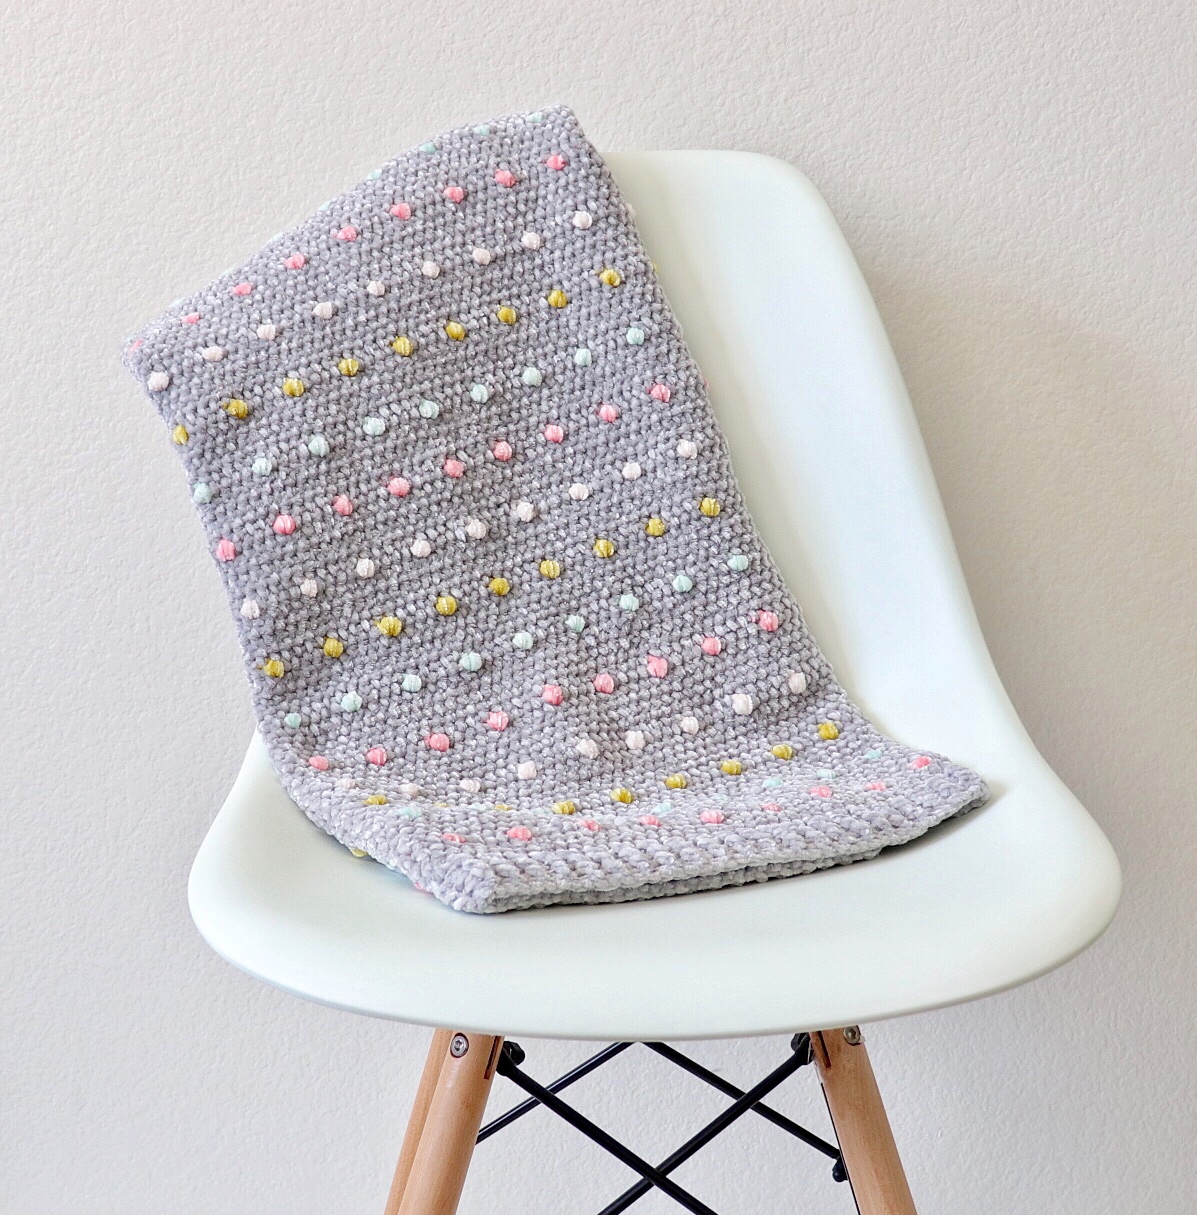 Crochet Candy Dots Baby Blanket - Daisy Farm Crafts